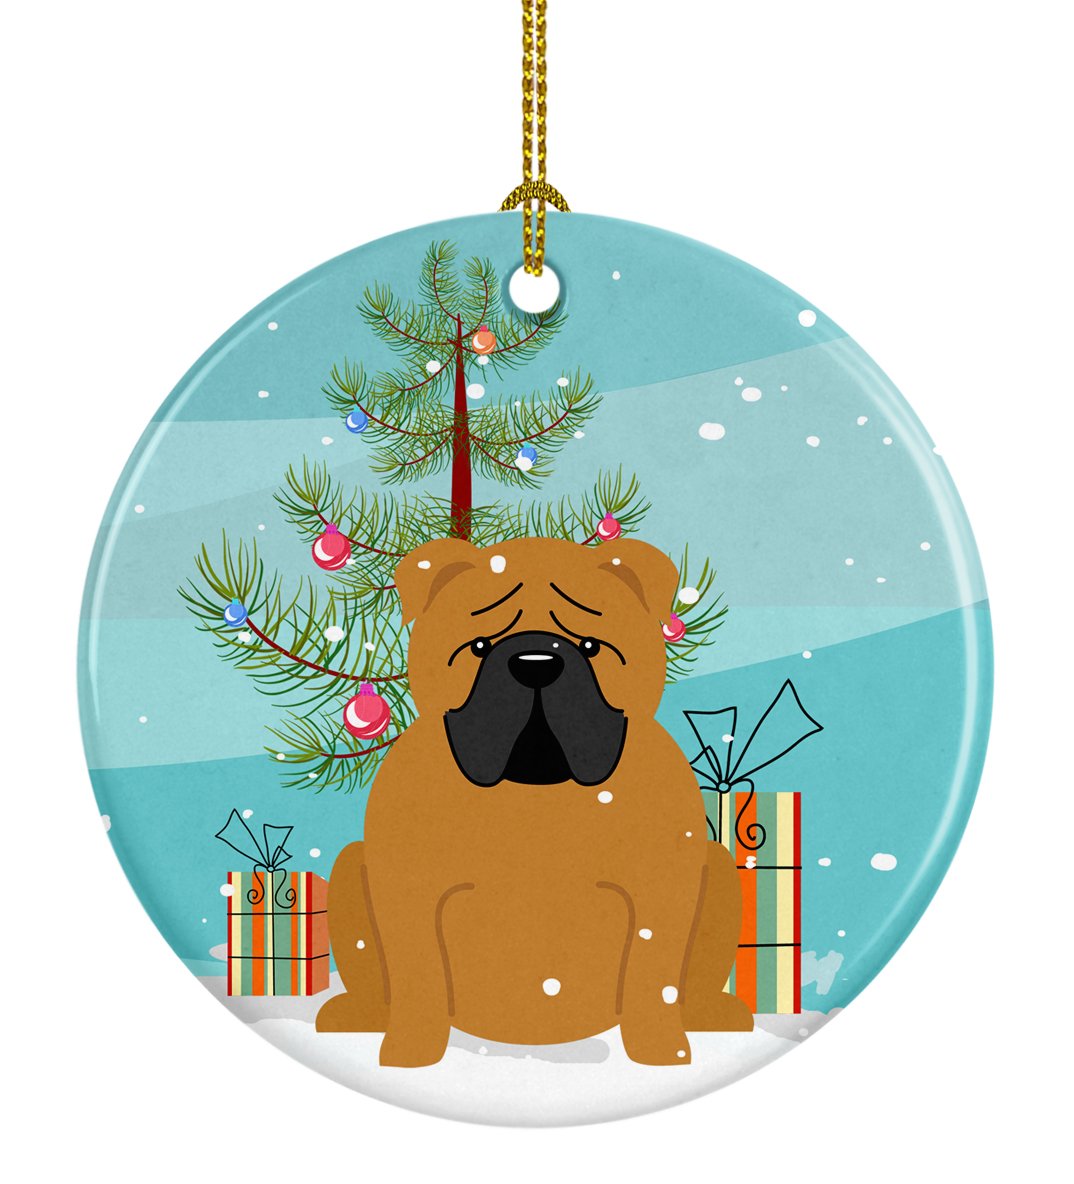 Merry Christmas Tree English Bulldog Red Ceramic Ornament BB4247CO1 by Caroline's Treasures